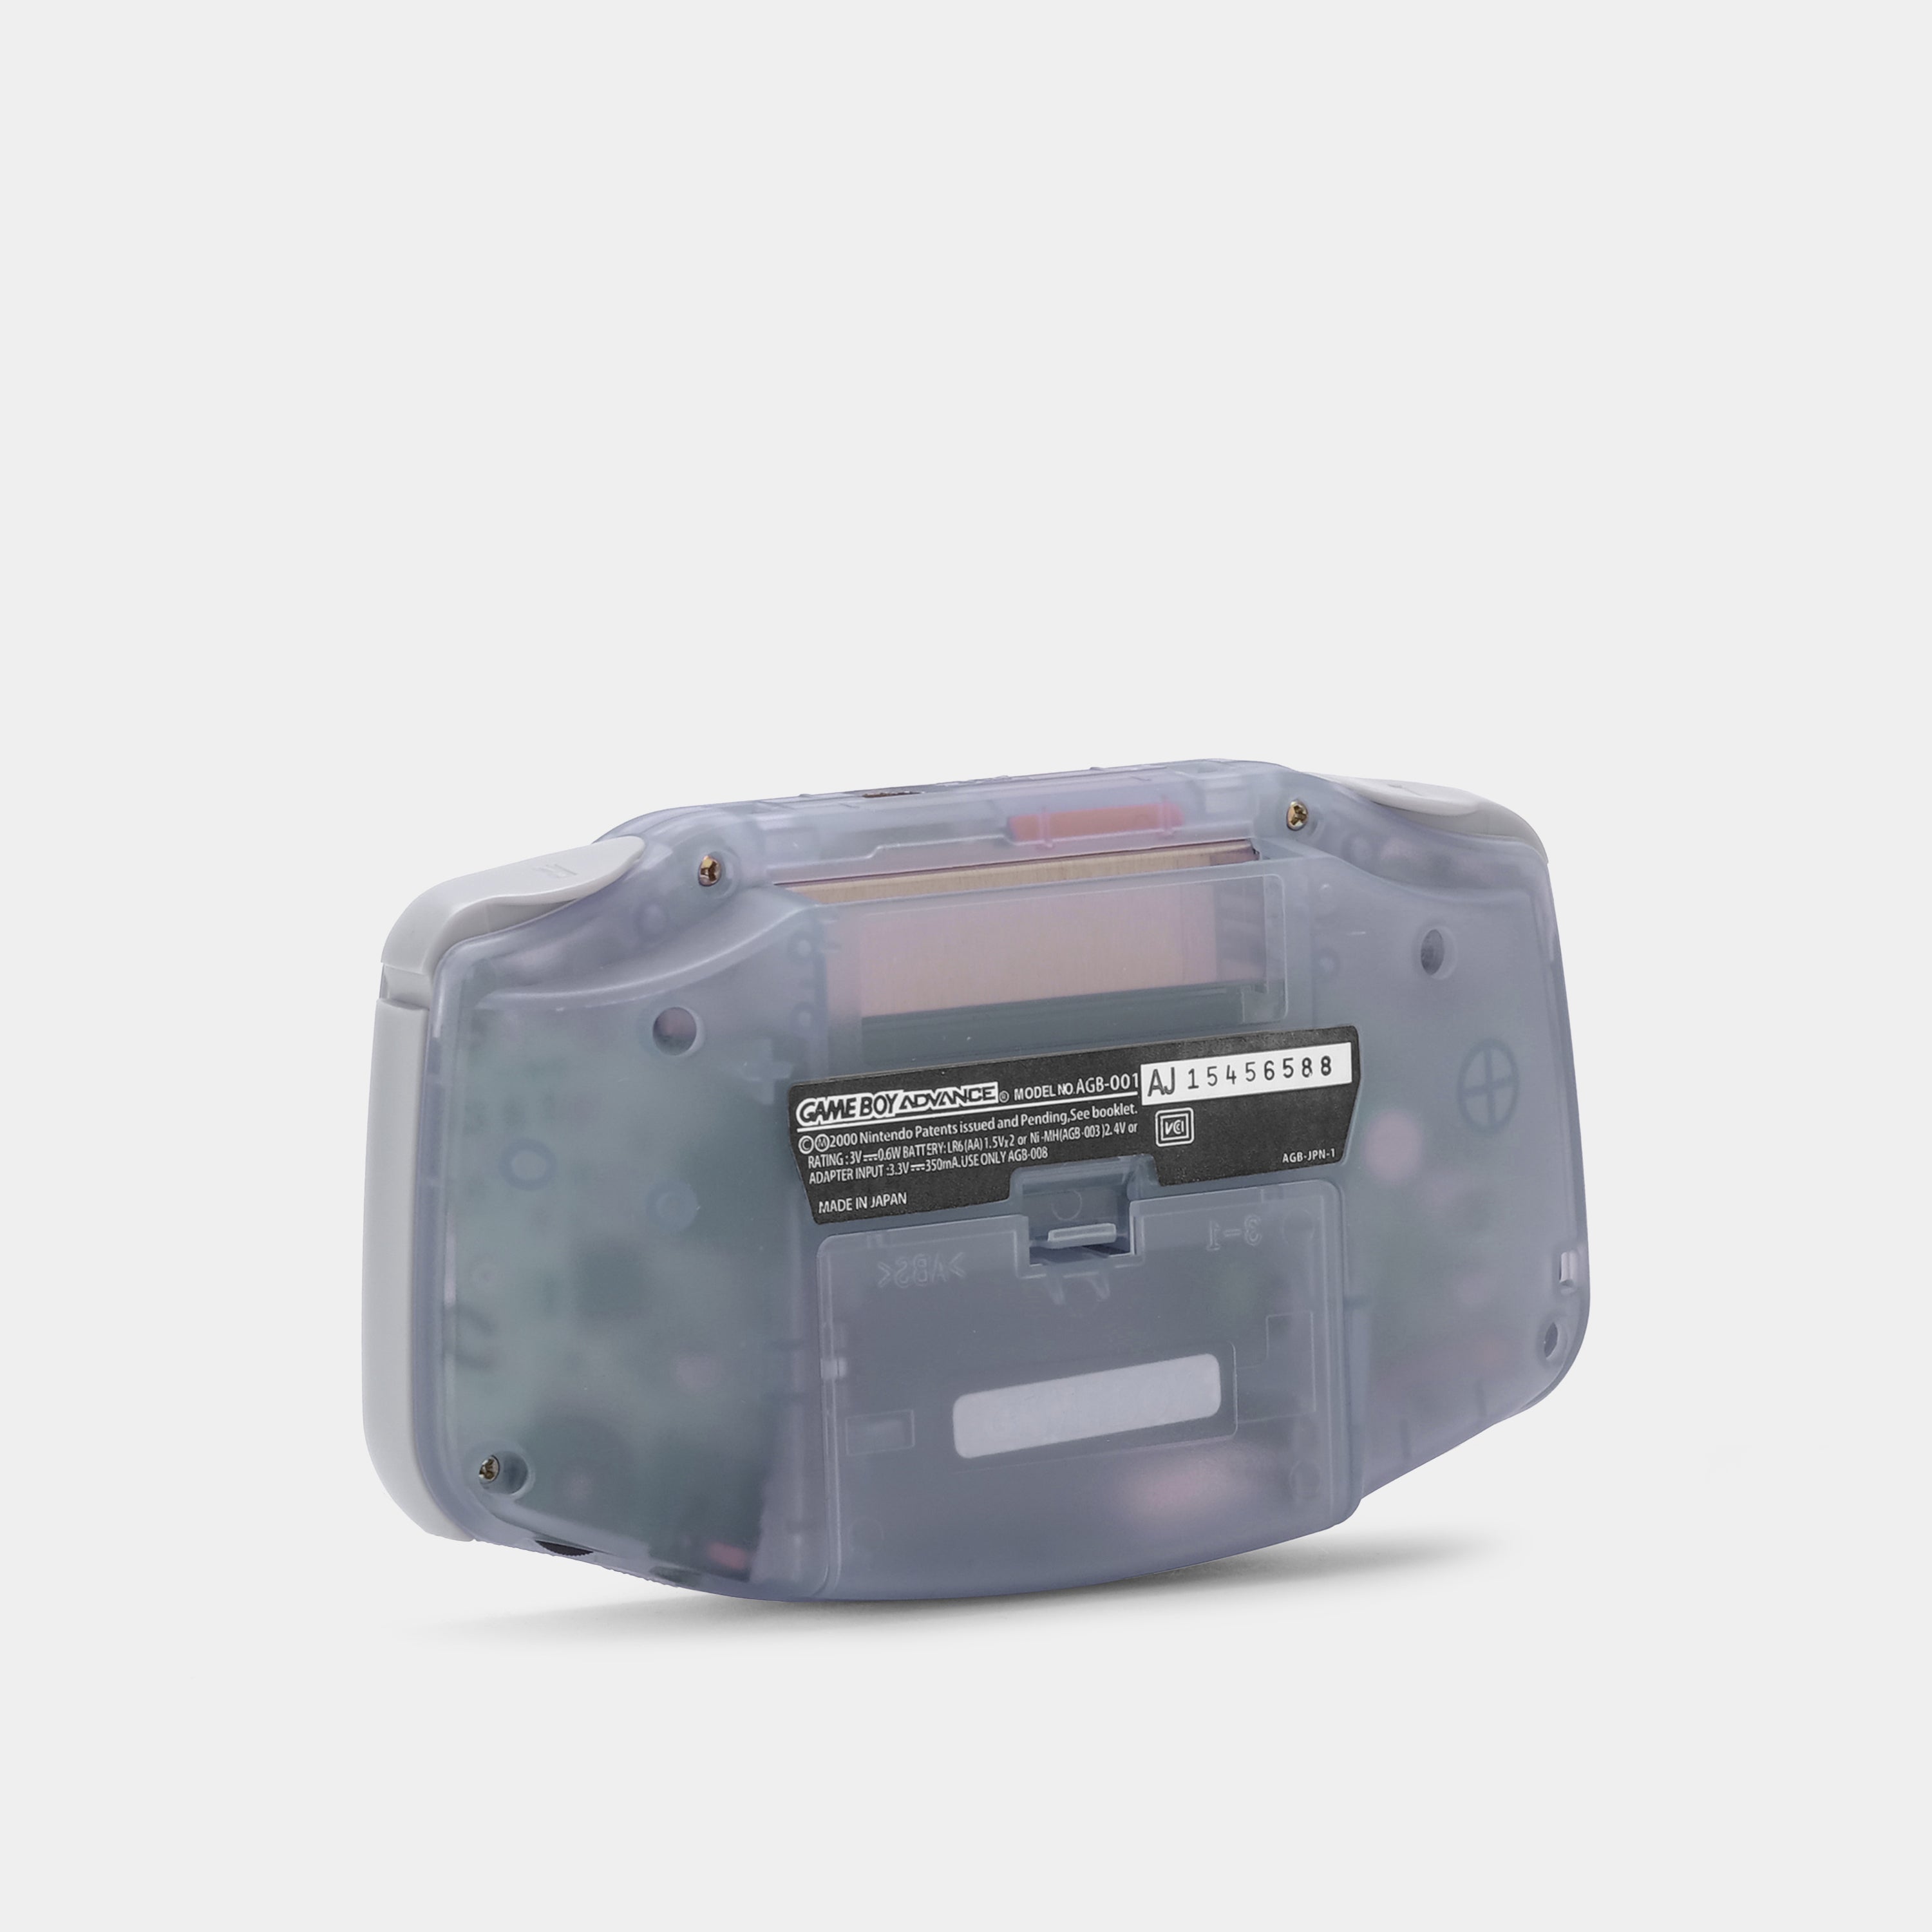 Nintendo Game Boy Advance Glacier Game Console